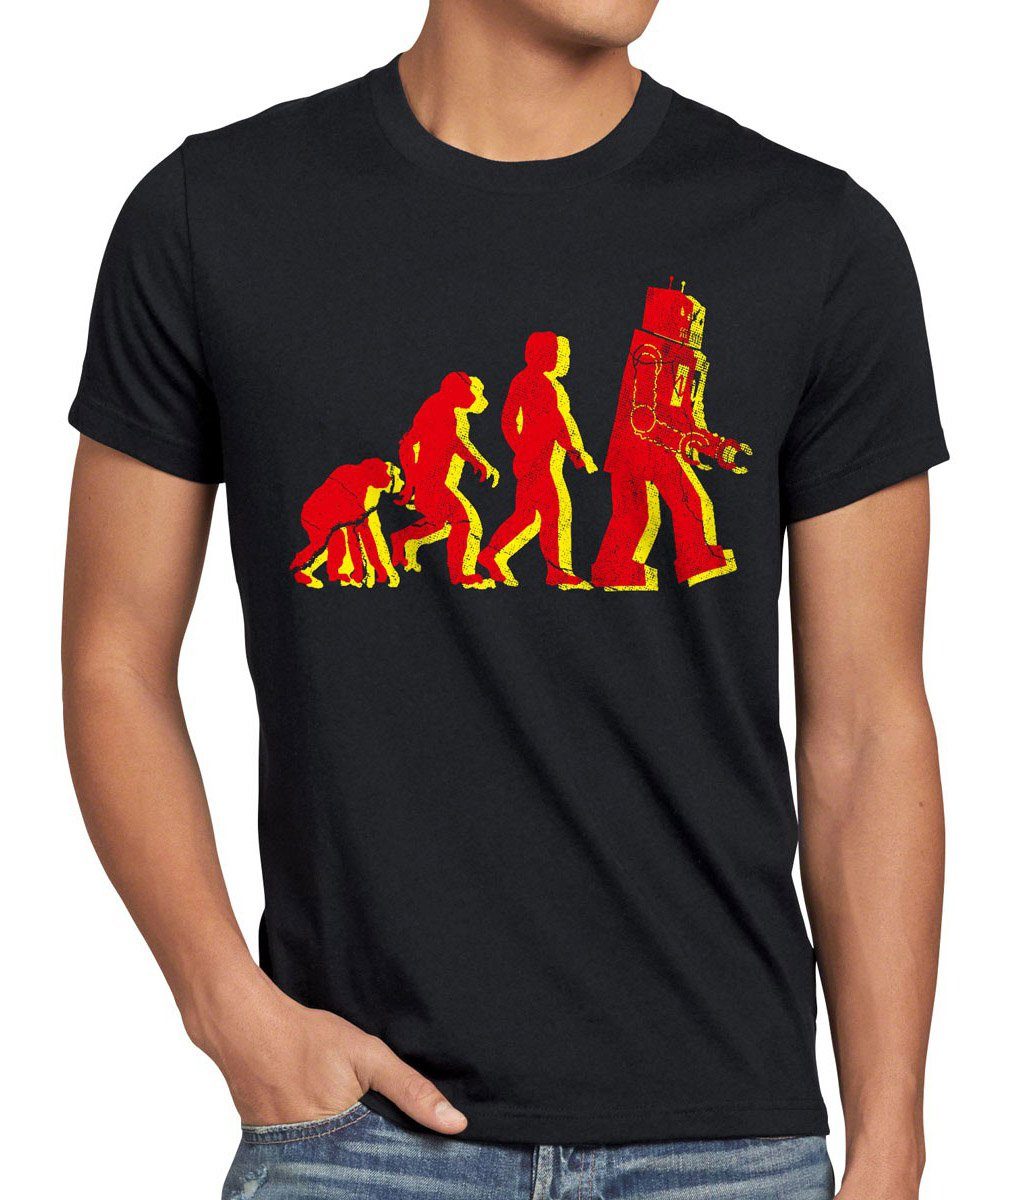 style3 Print-Shirt Herren T-Shirt Evolution big bang roboter sheldon theory cooper darwin neu robot schwarz